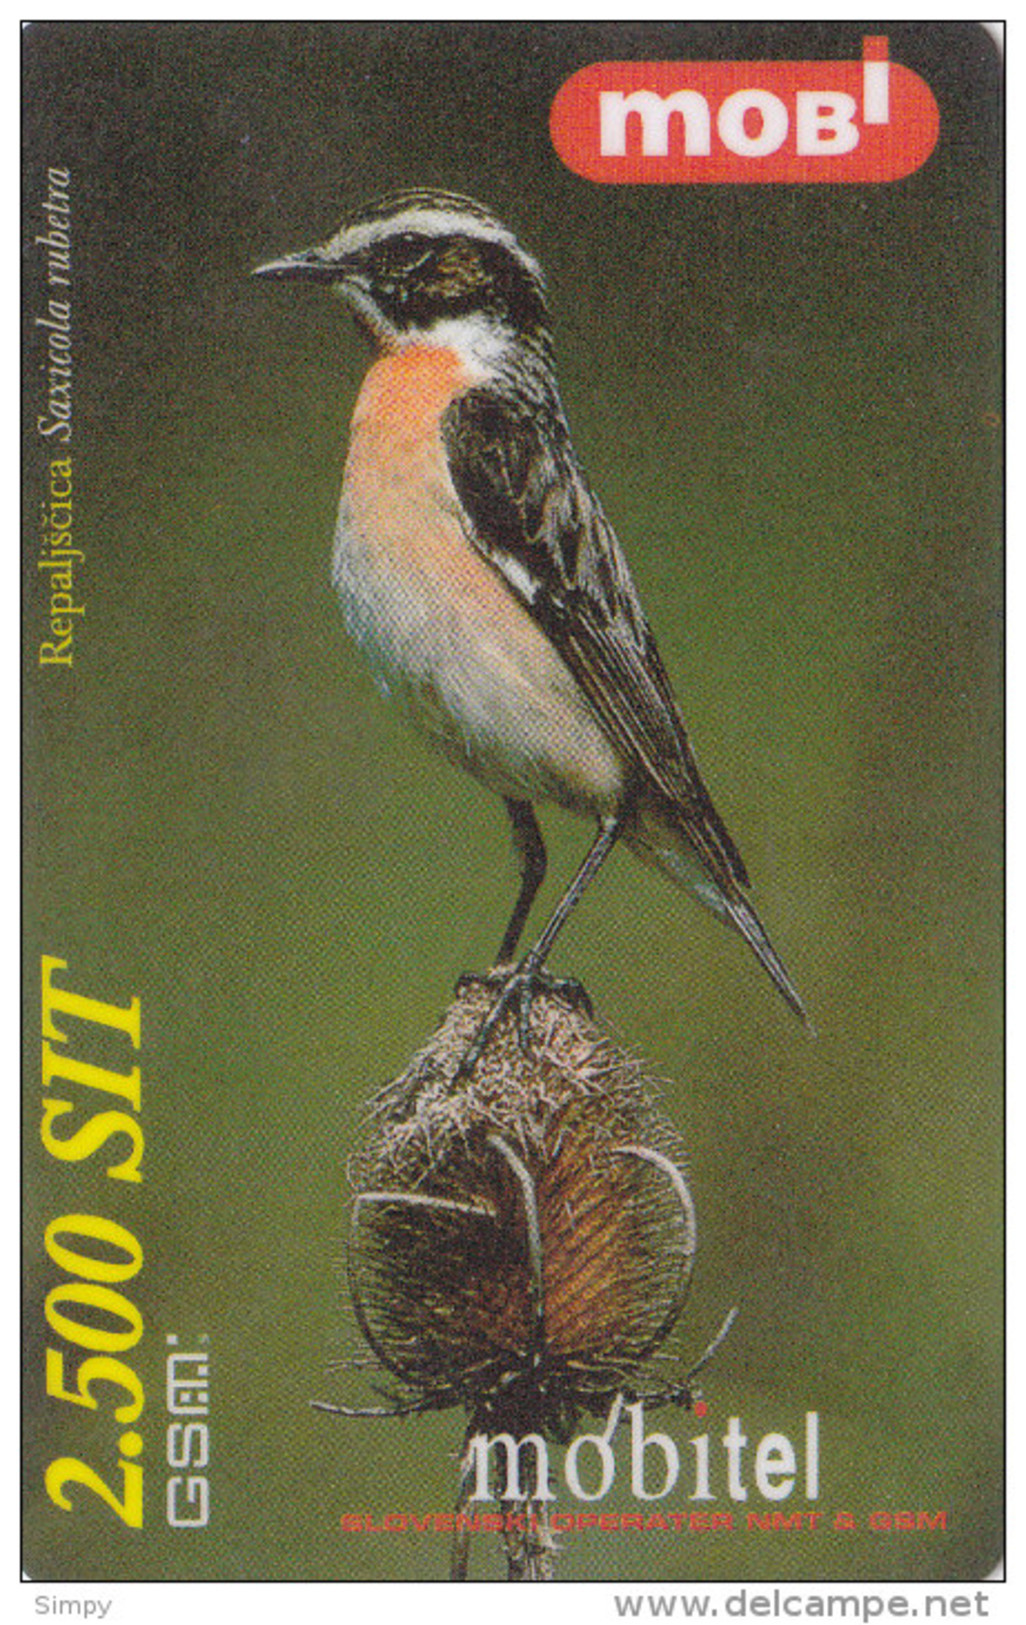 SLOVENIA Mobil Prepaid Phonecard Bird Repaljscica Saxicola Ruberta Valid 31.1.2001 - Songbirds & Tree Dwellers